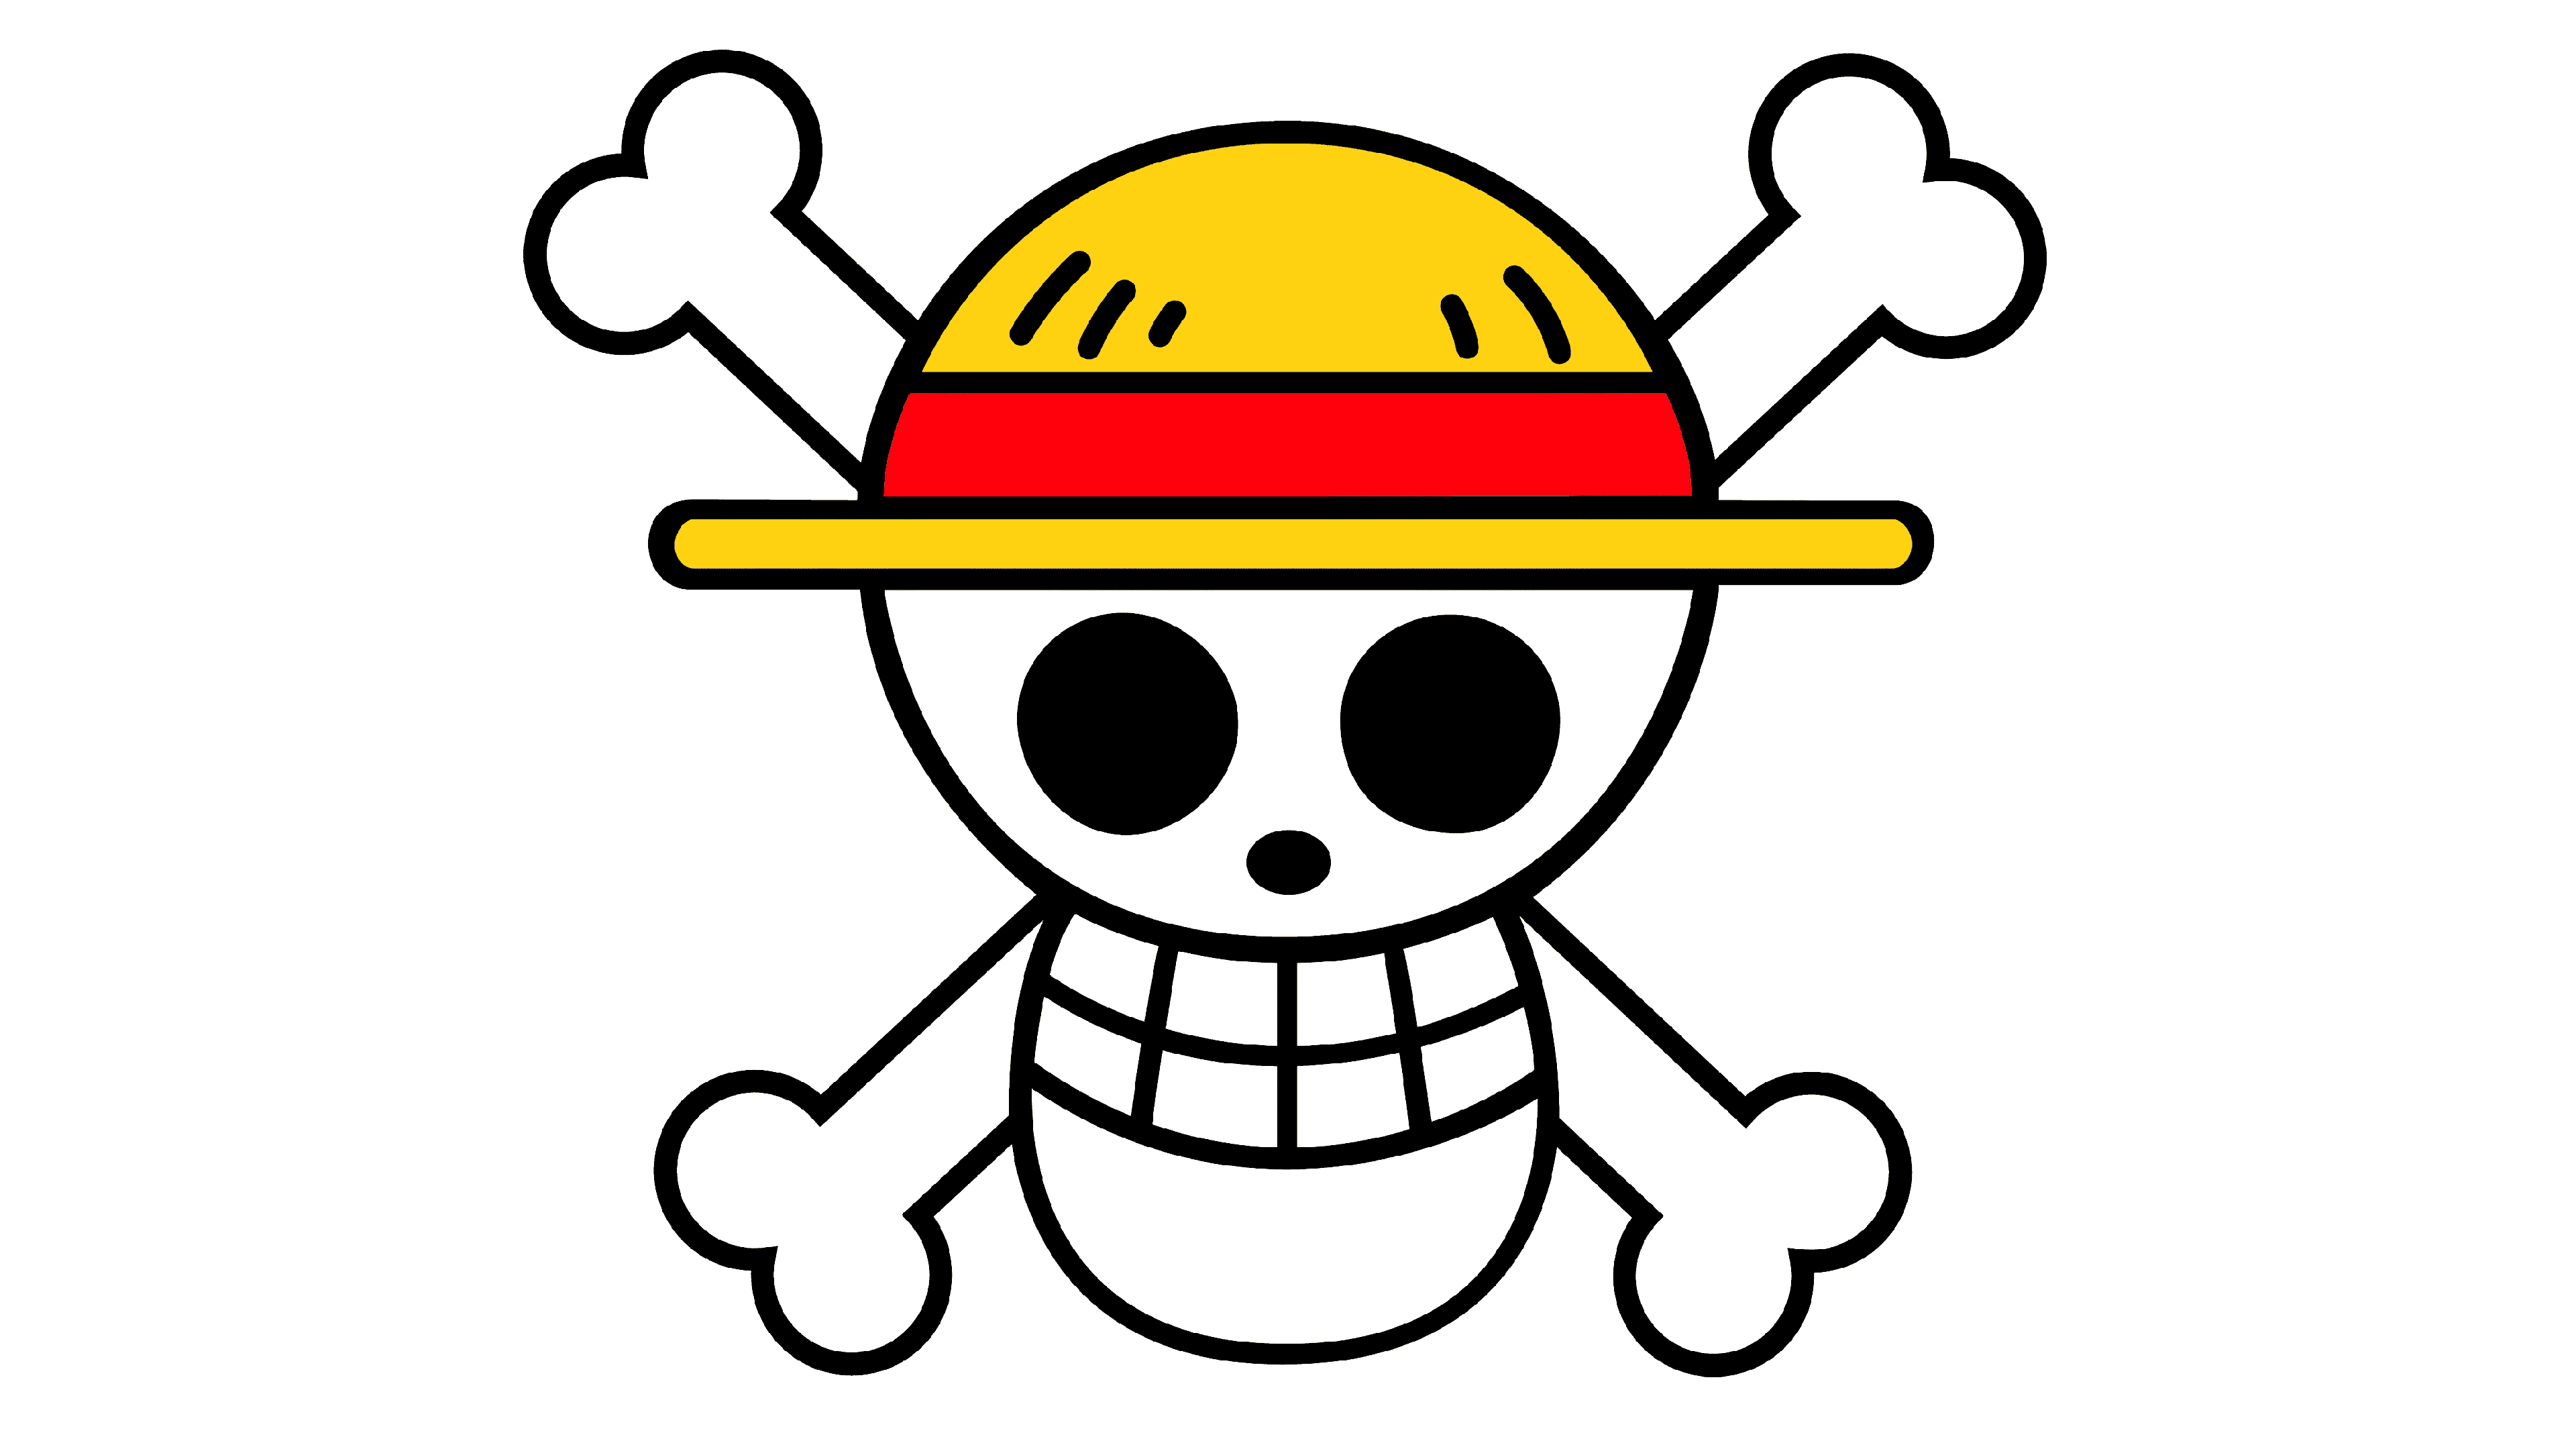 Anime One Piece Pirate Crew Logo Waterproof Decal Sticker | eBay